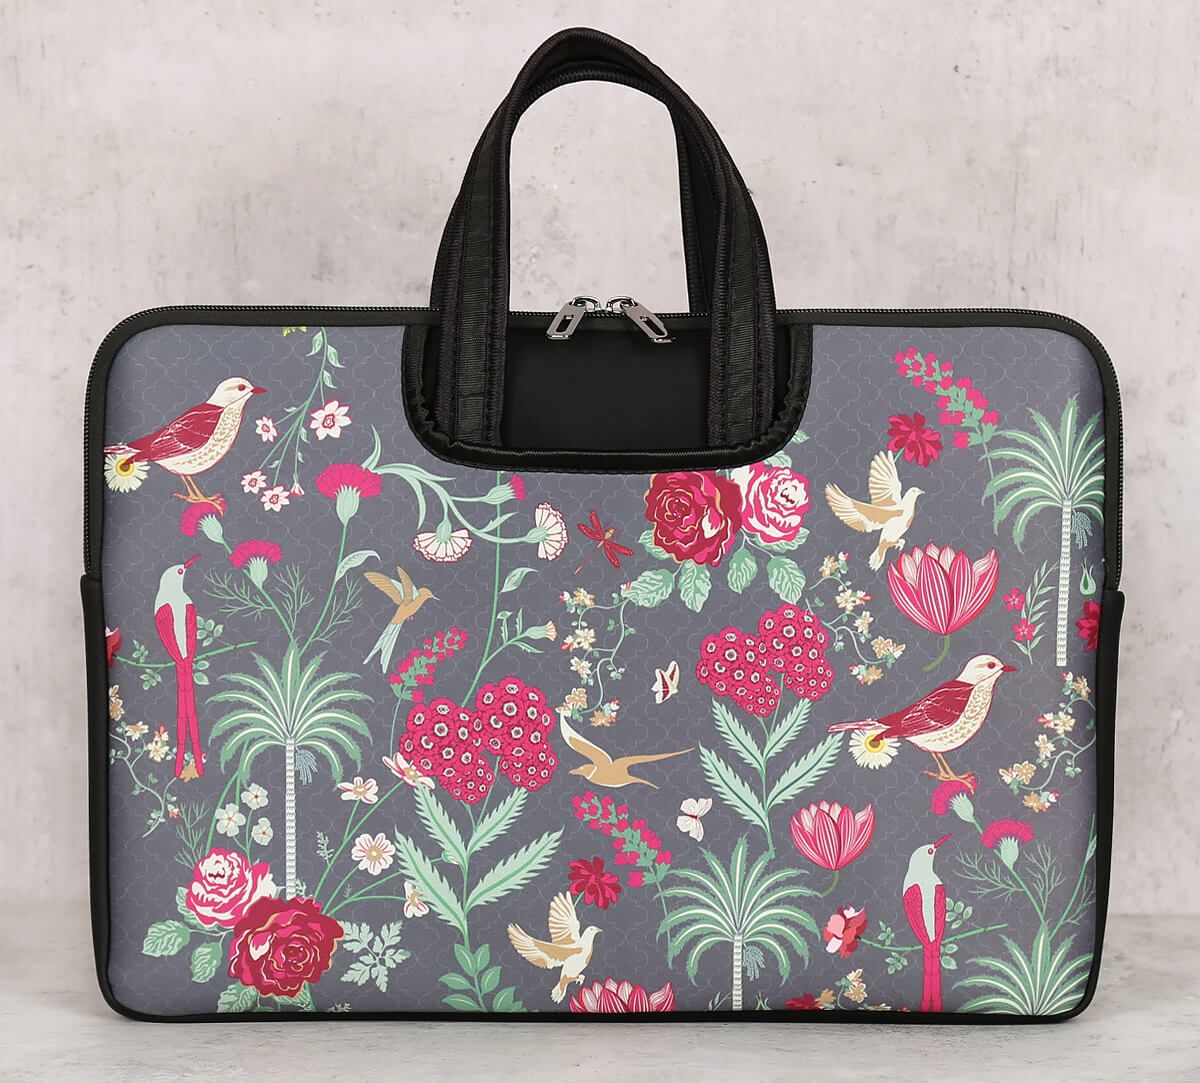 India Circus by Krsnaa Mehta Floral Galore Laptop Sleeve Bag